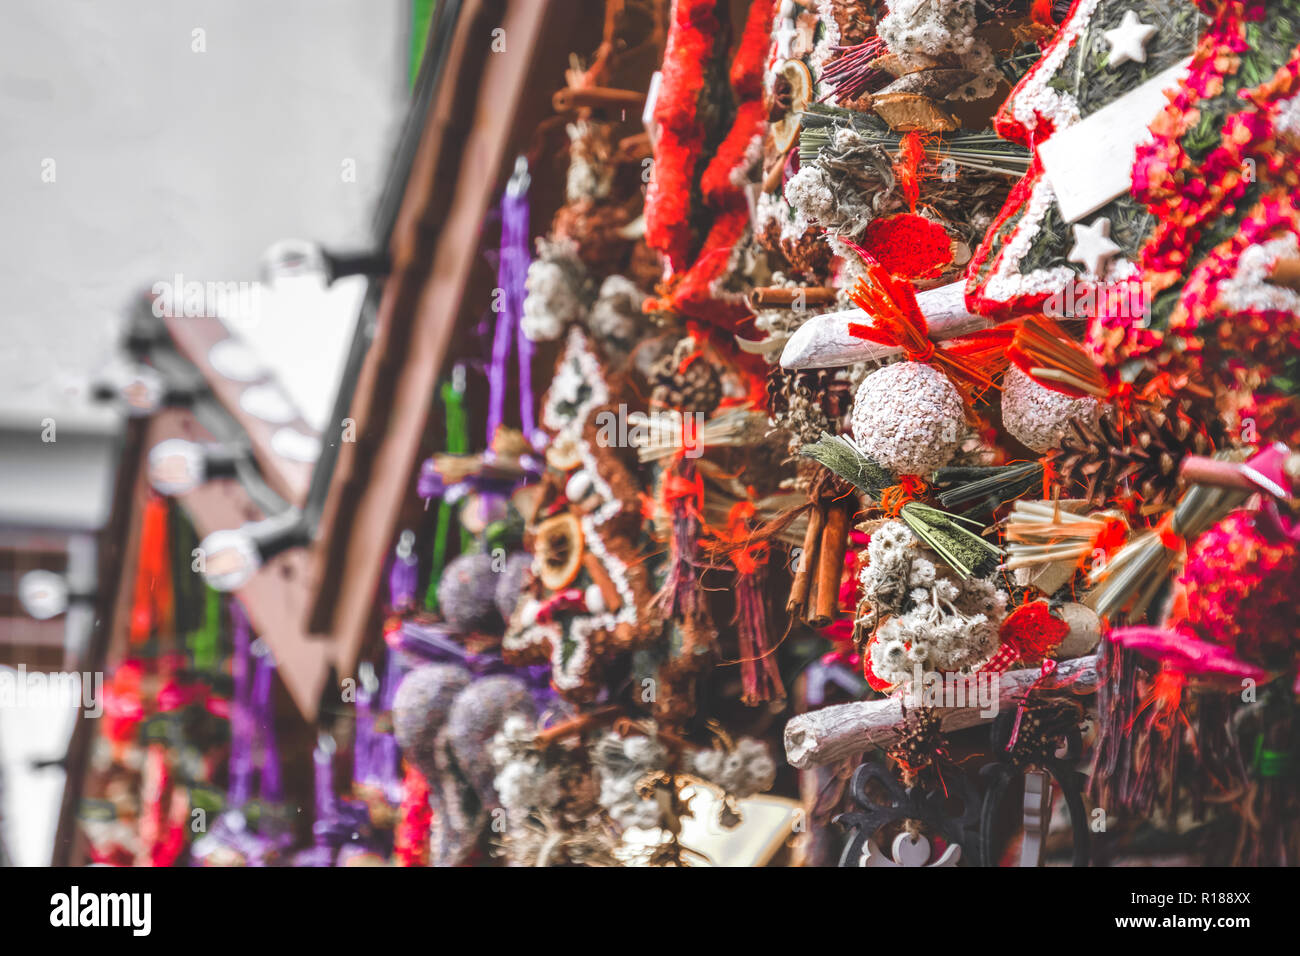 Red entsättigt Selektive Farbe Weihnachtsmarkt Kränze Dekoration stall Details roten Kiosk Stockfoto